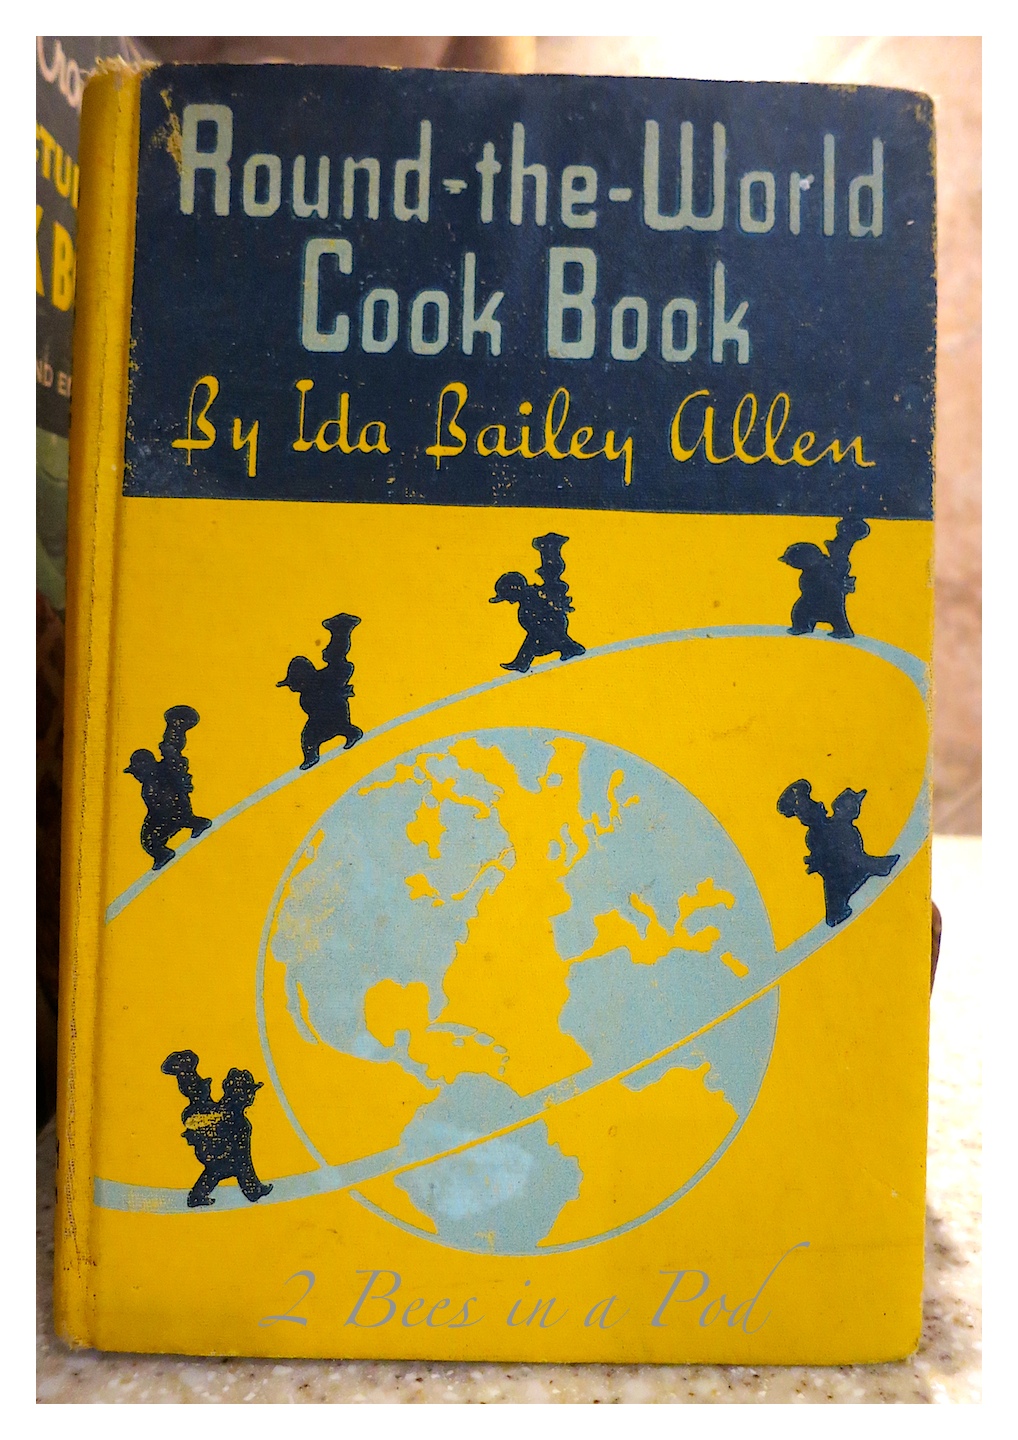 Collection of inherited vintage cookbooks...